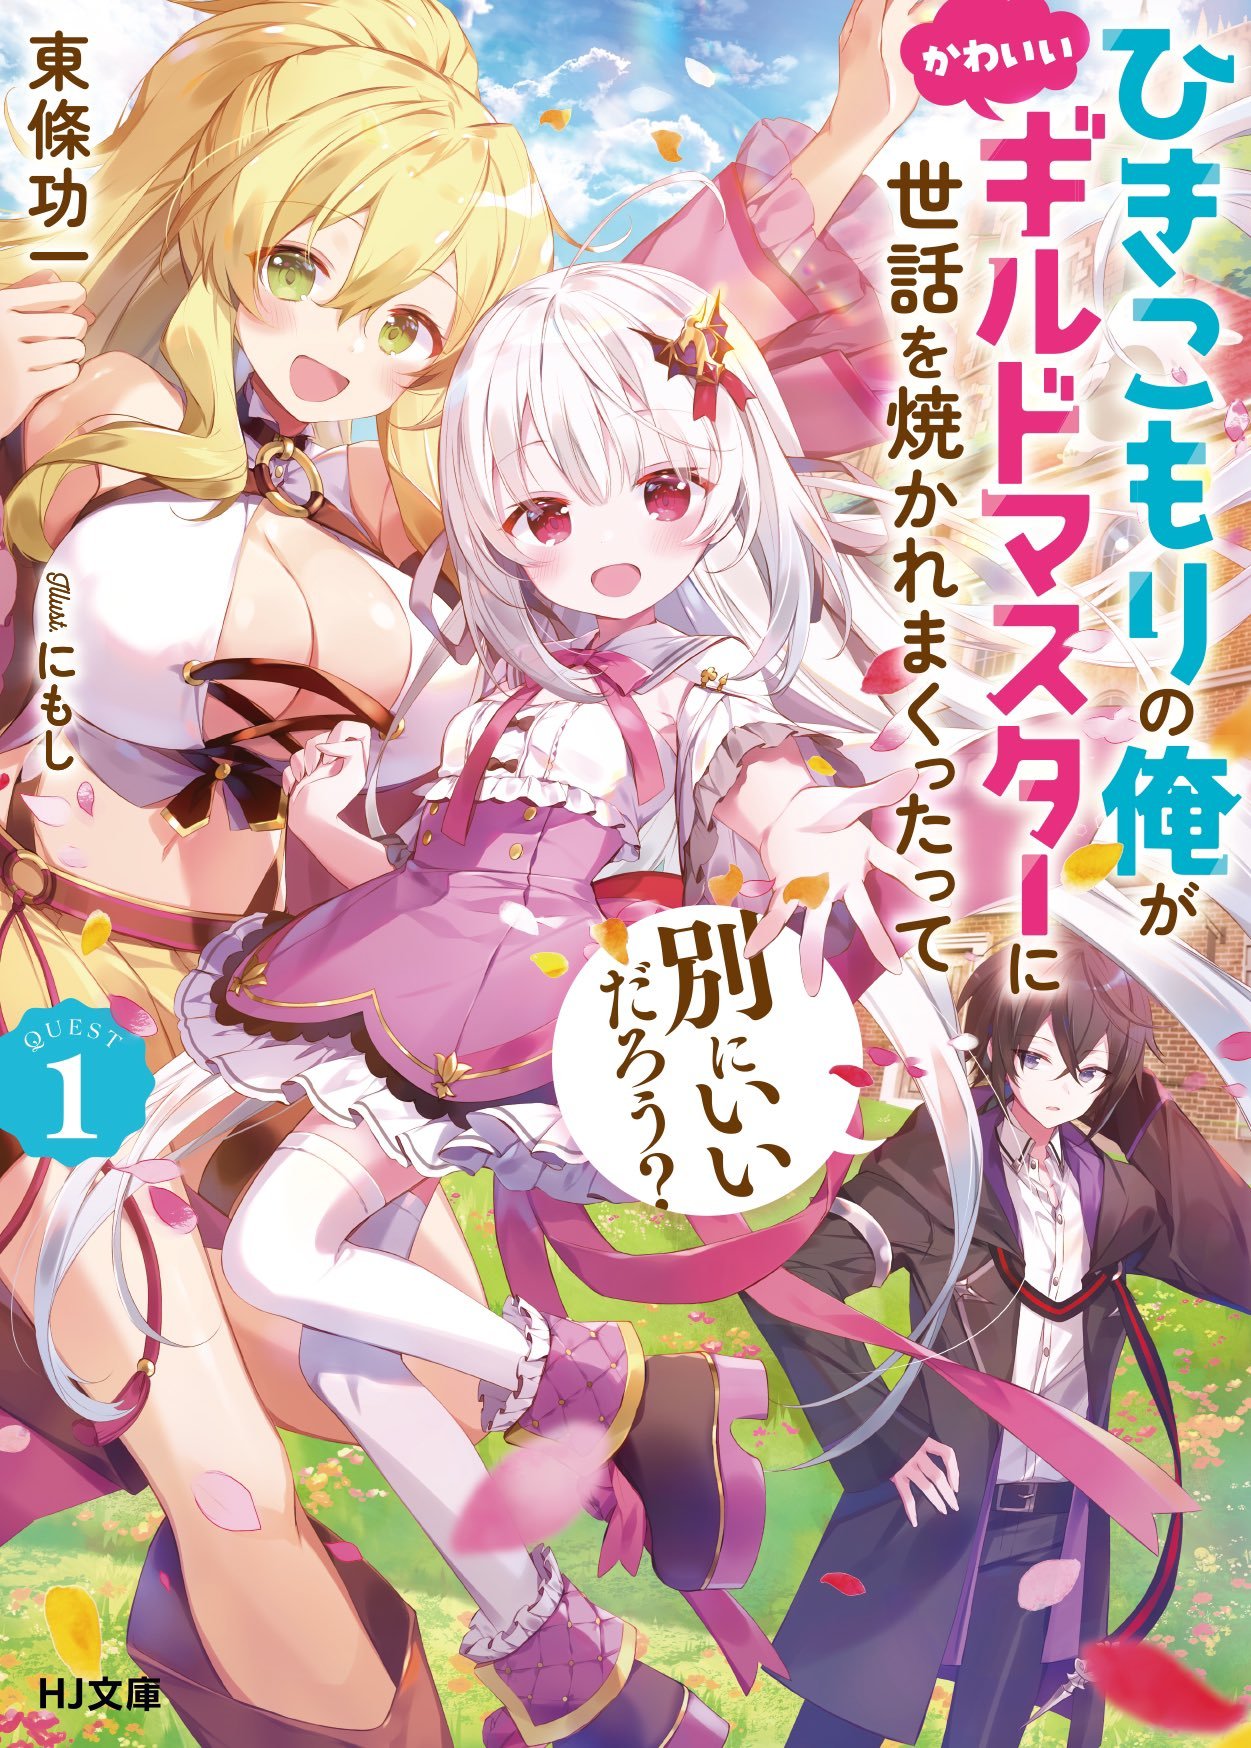 Manga Mogura RE on X: Light Novel series Yuusha Party o Tsuihou Sareta  Beast Tamer, Saikyou Shuzoku Nekomimi Shoujo to Deau by Miyama Suzu, Hoto  Souka has 2.5 million copies (including manga)